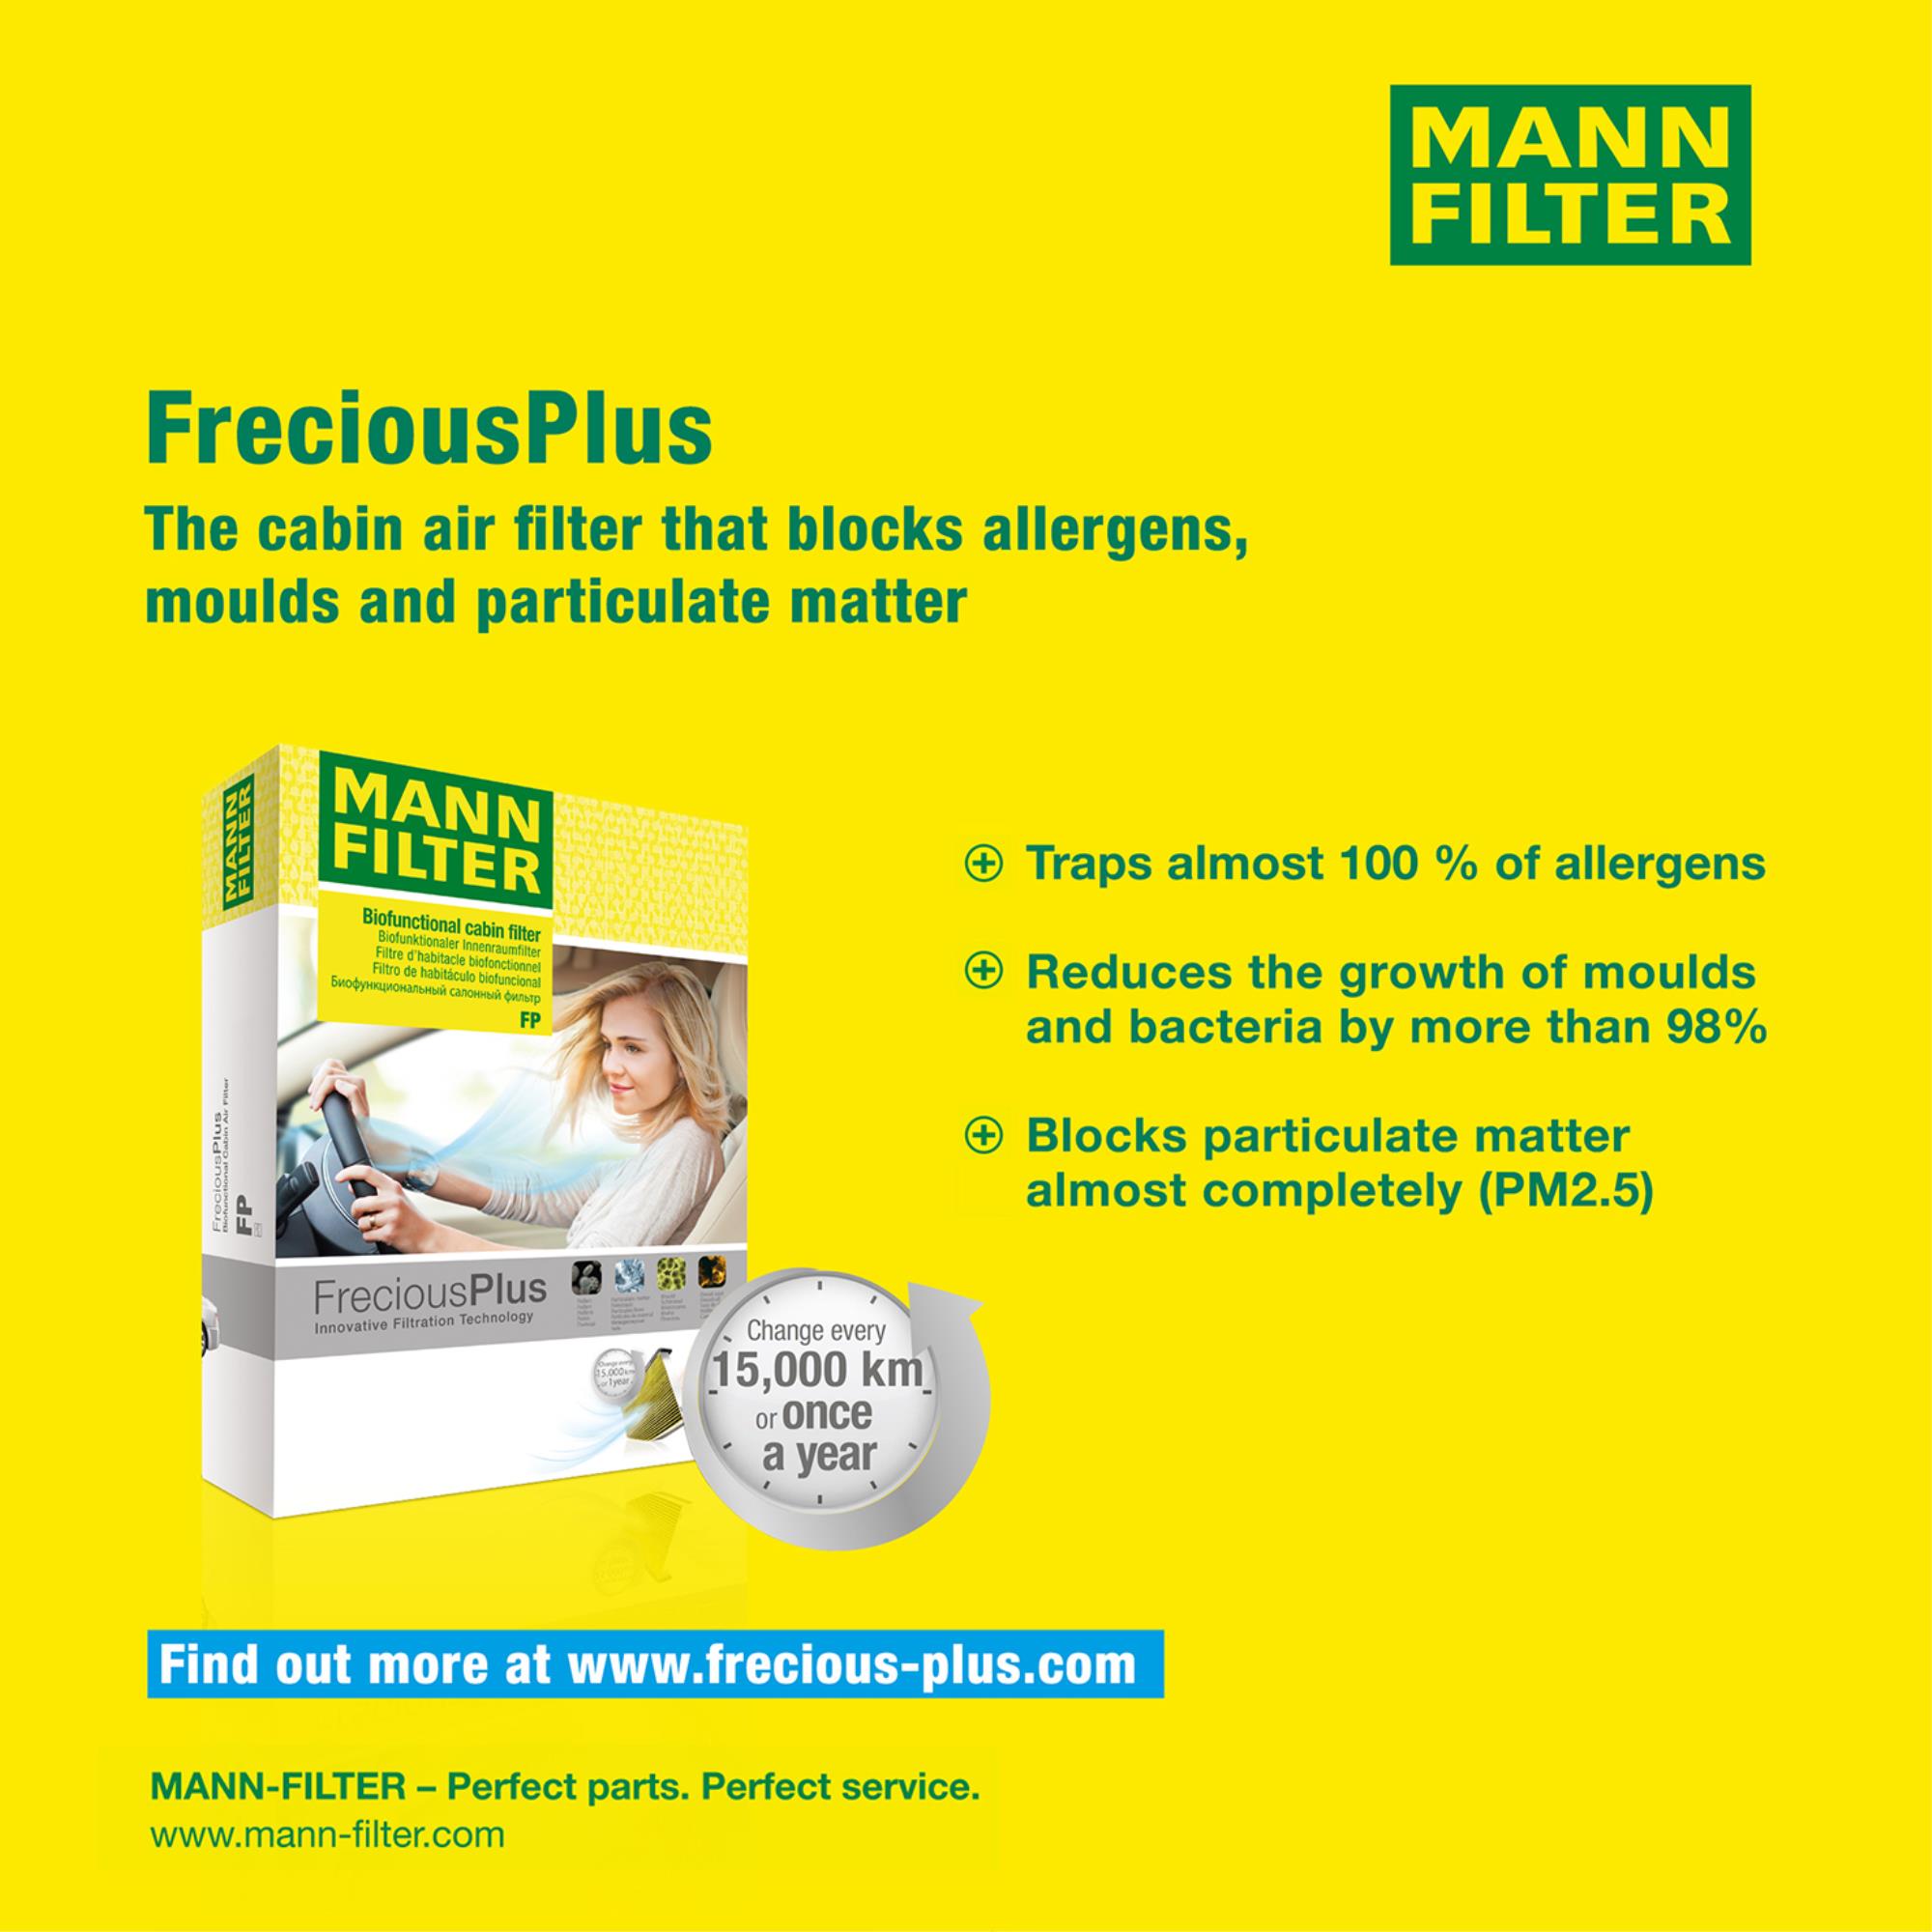 MANN-Filter Innenraumfilter Biofunctional für Allergiker FP 3454